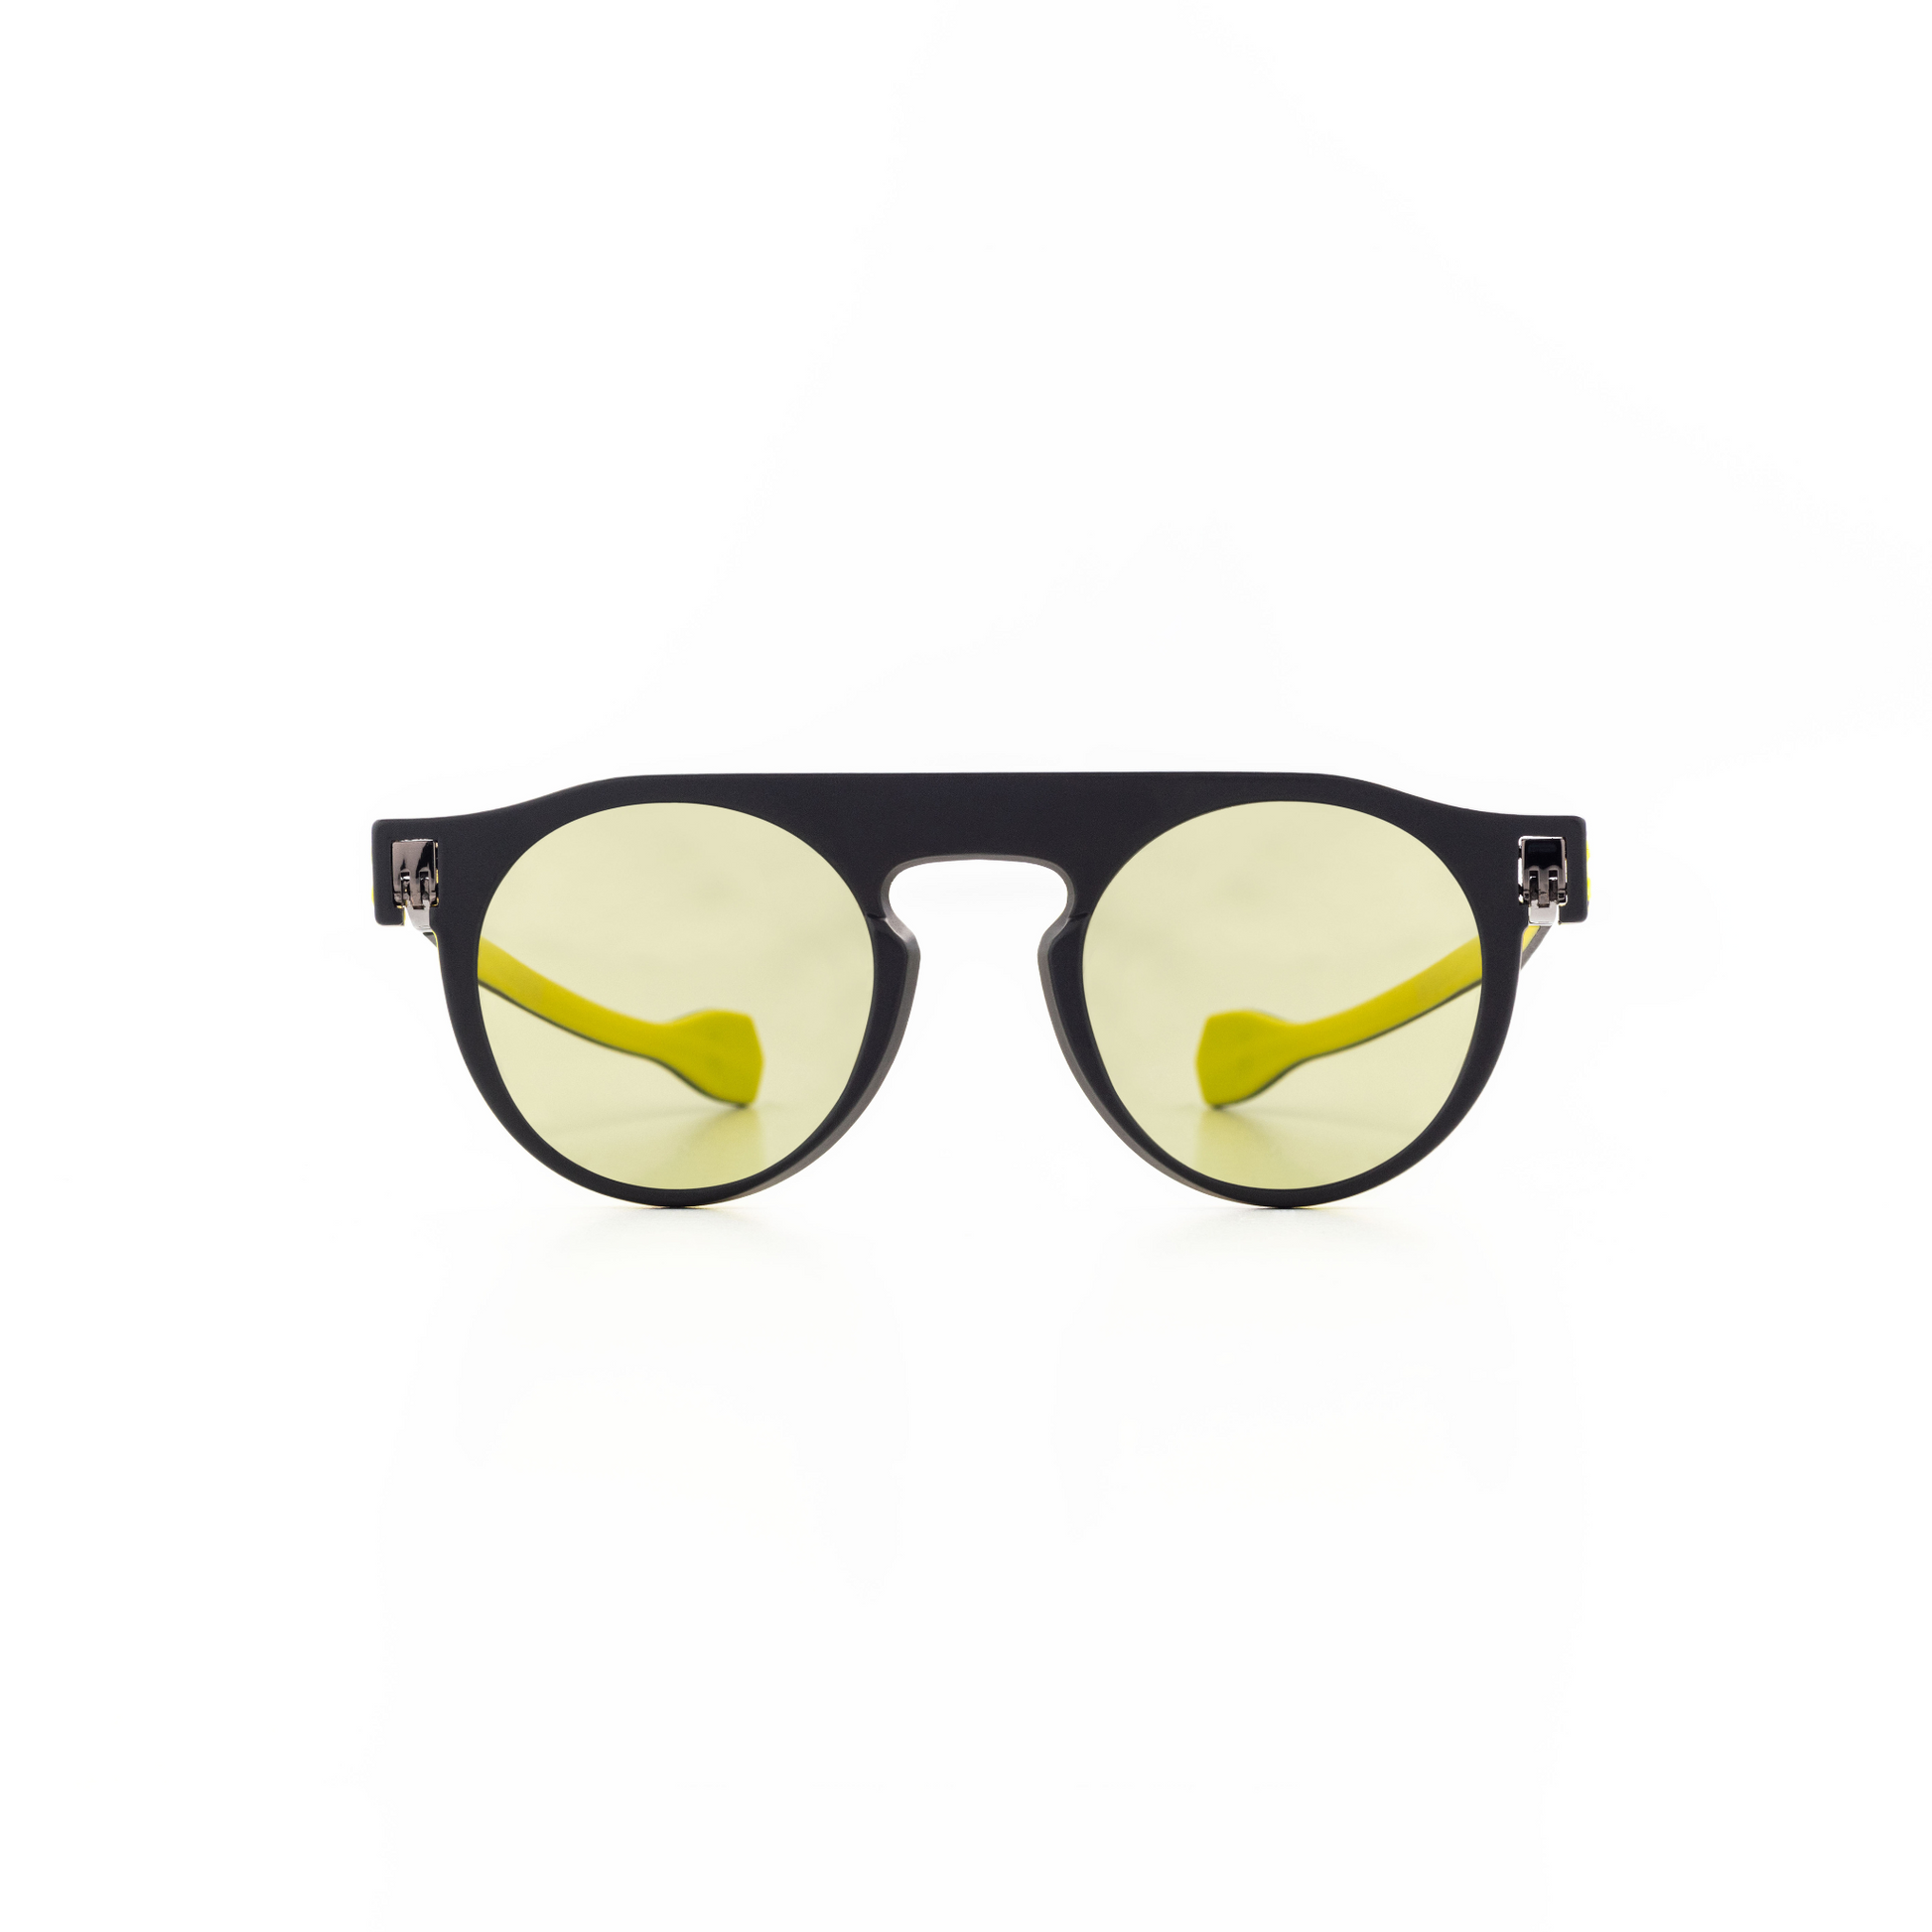 Reverso sunglasses black & yellow reversible & ultra light front view 2